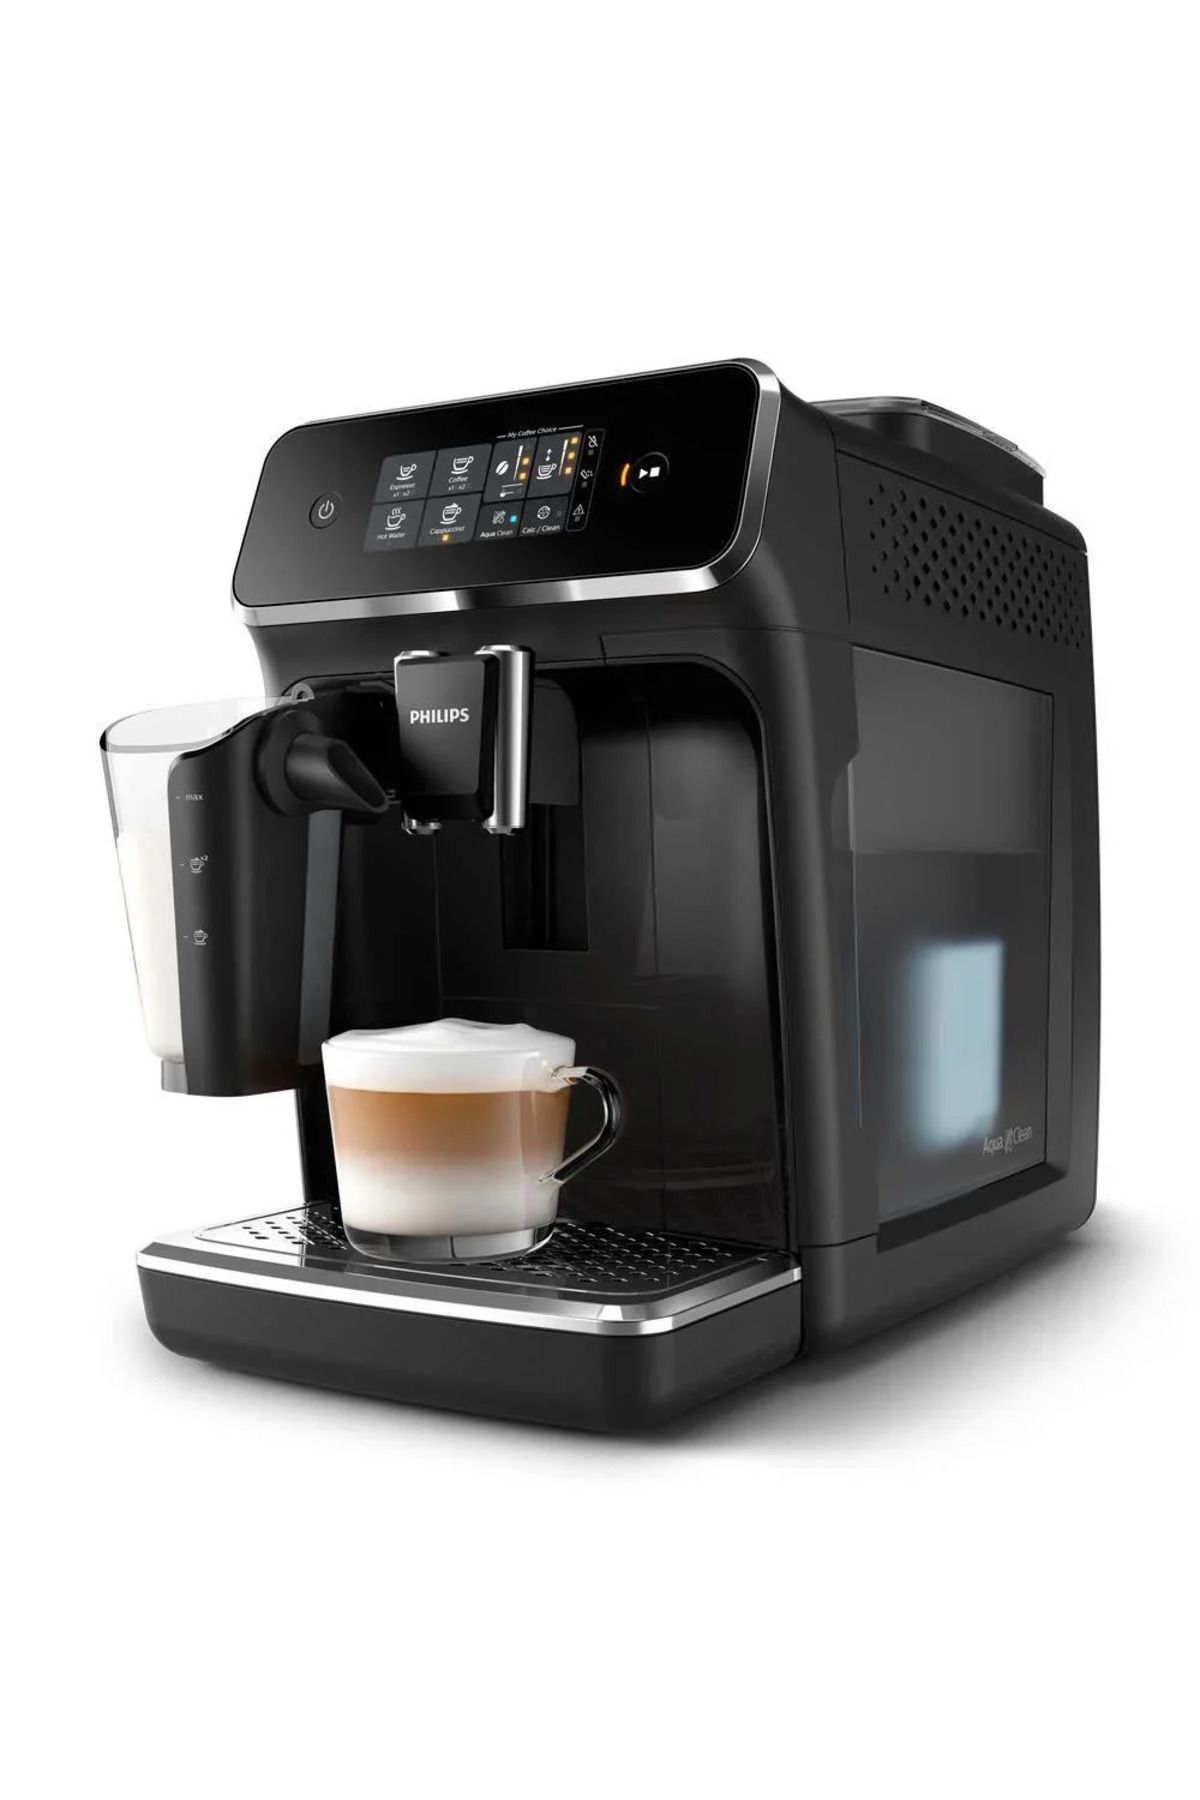 Philips AquaClean My Coffee Choice Yüksek hızlı LatteGo Dokunmatik ekran TAM OTOMATİK ESPRESSO MAKİNESİ